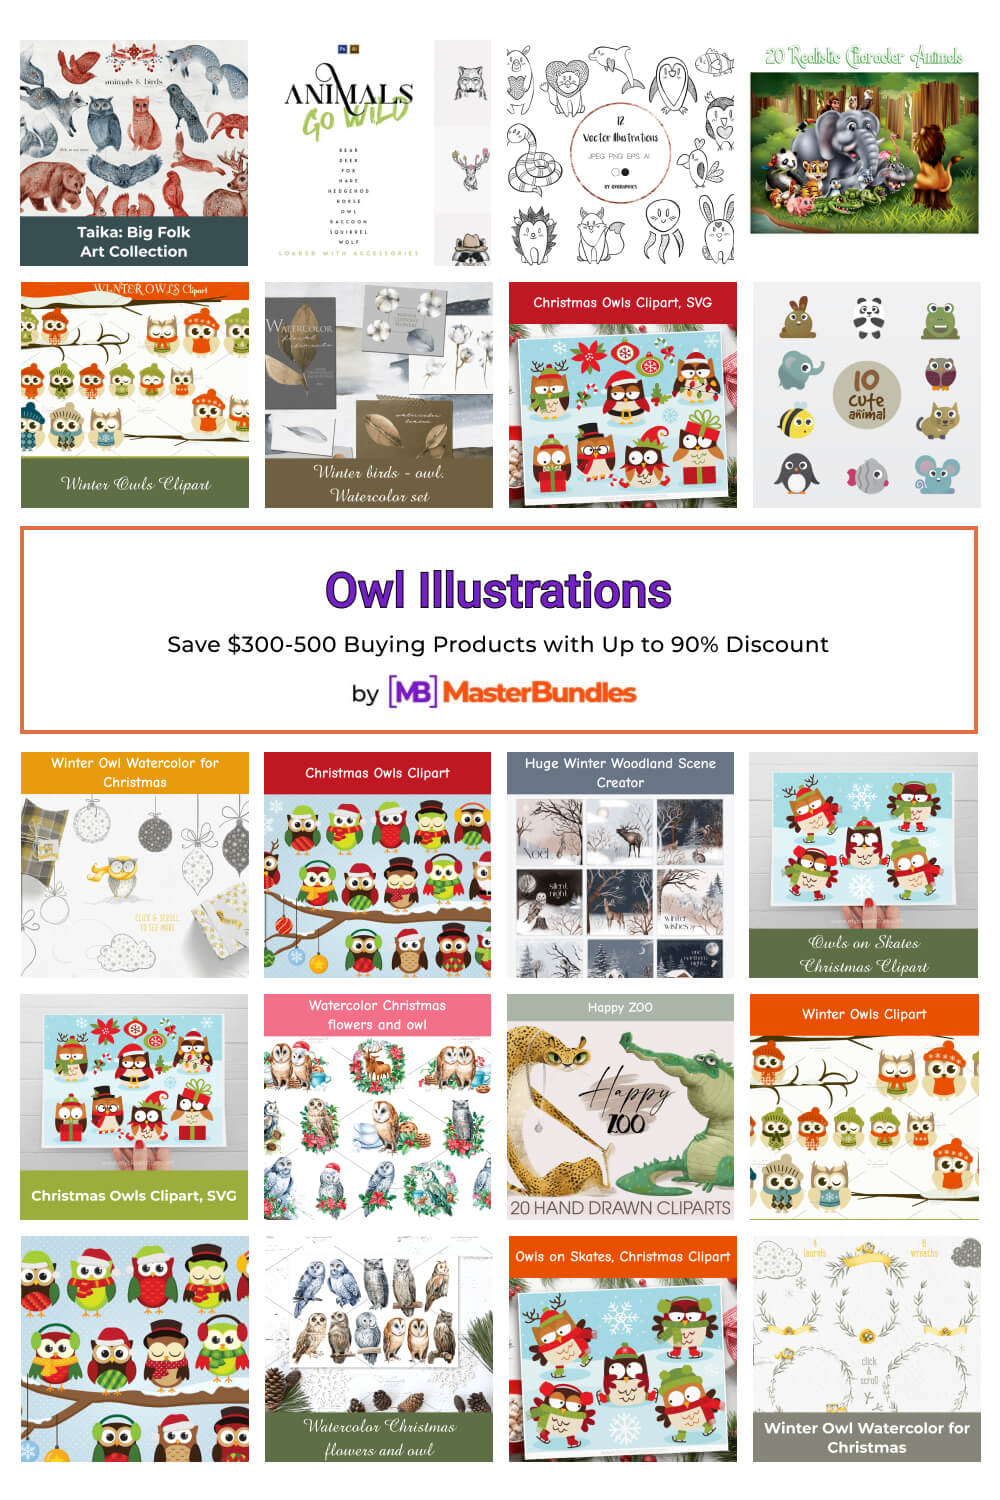 owl illustrations pinterest image.